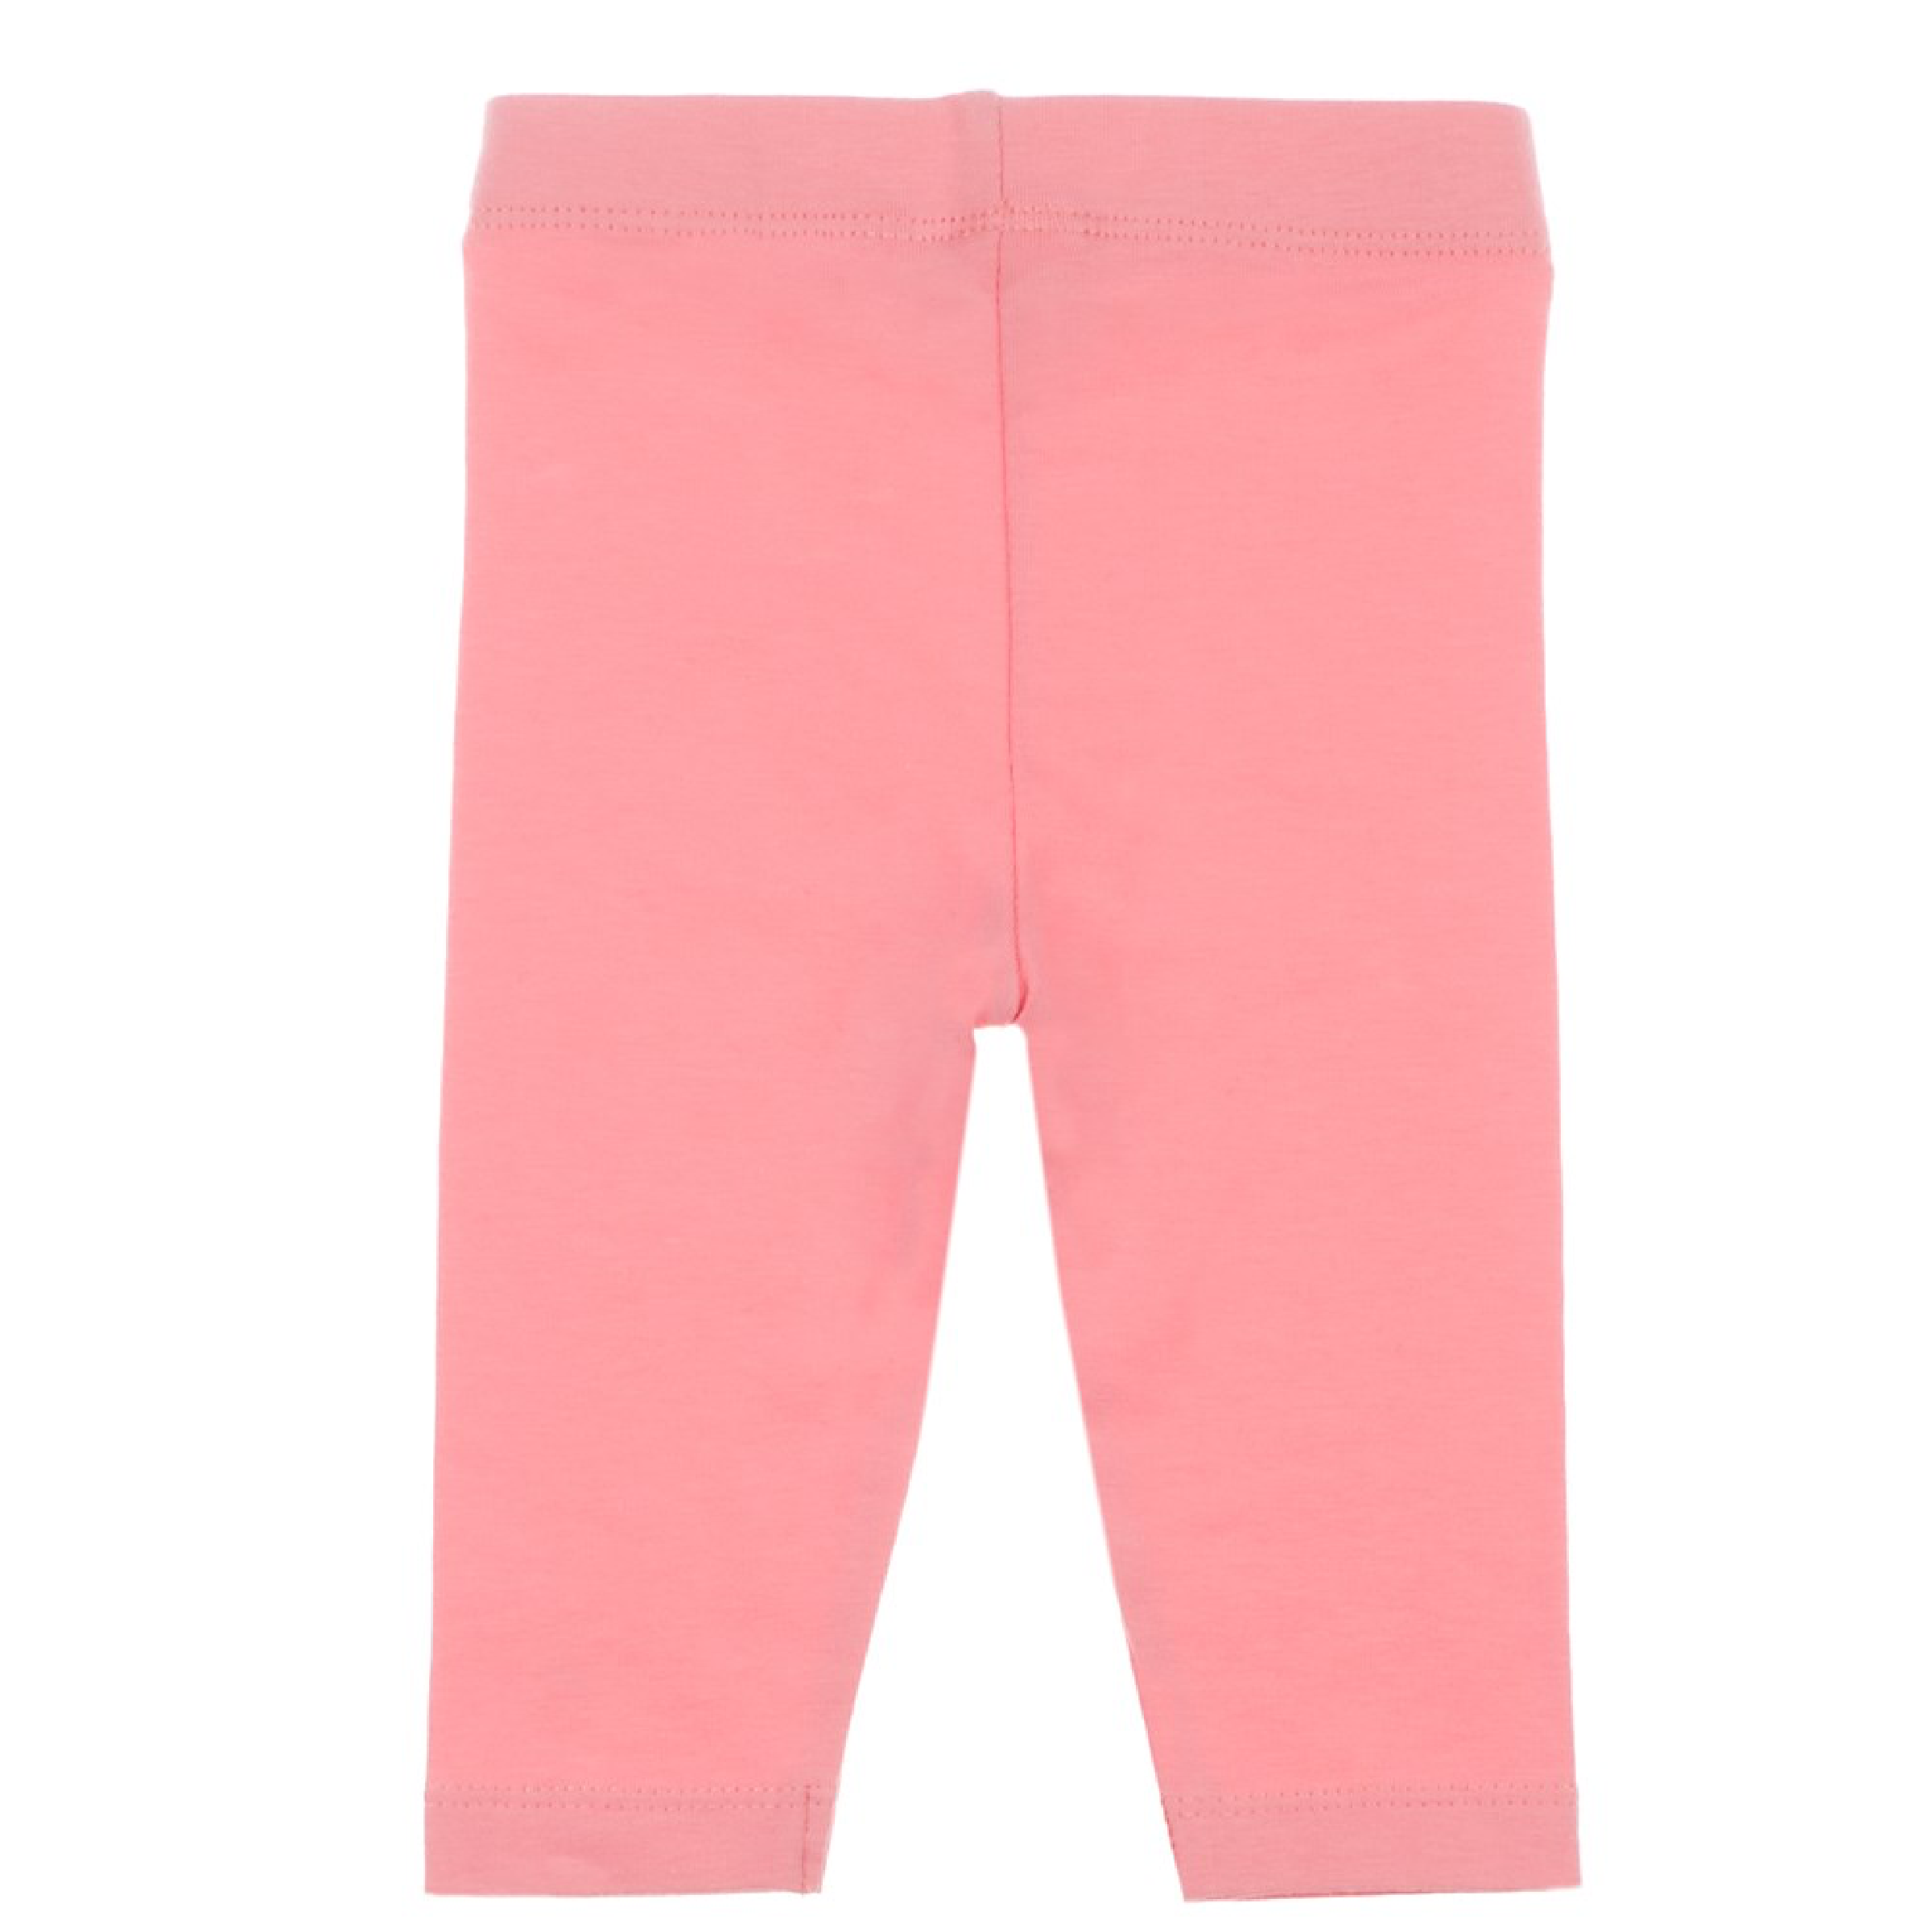 Meisjes Legging - Mon Petit van Feetje in de kleur Roze in maat 86.